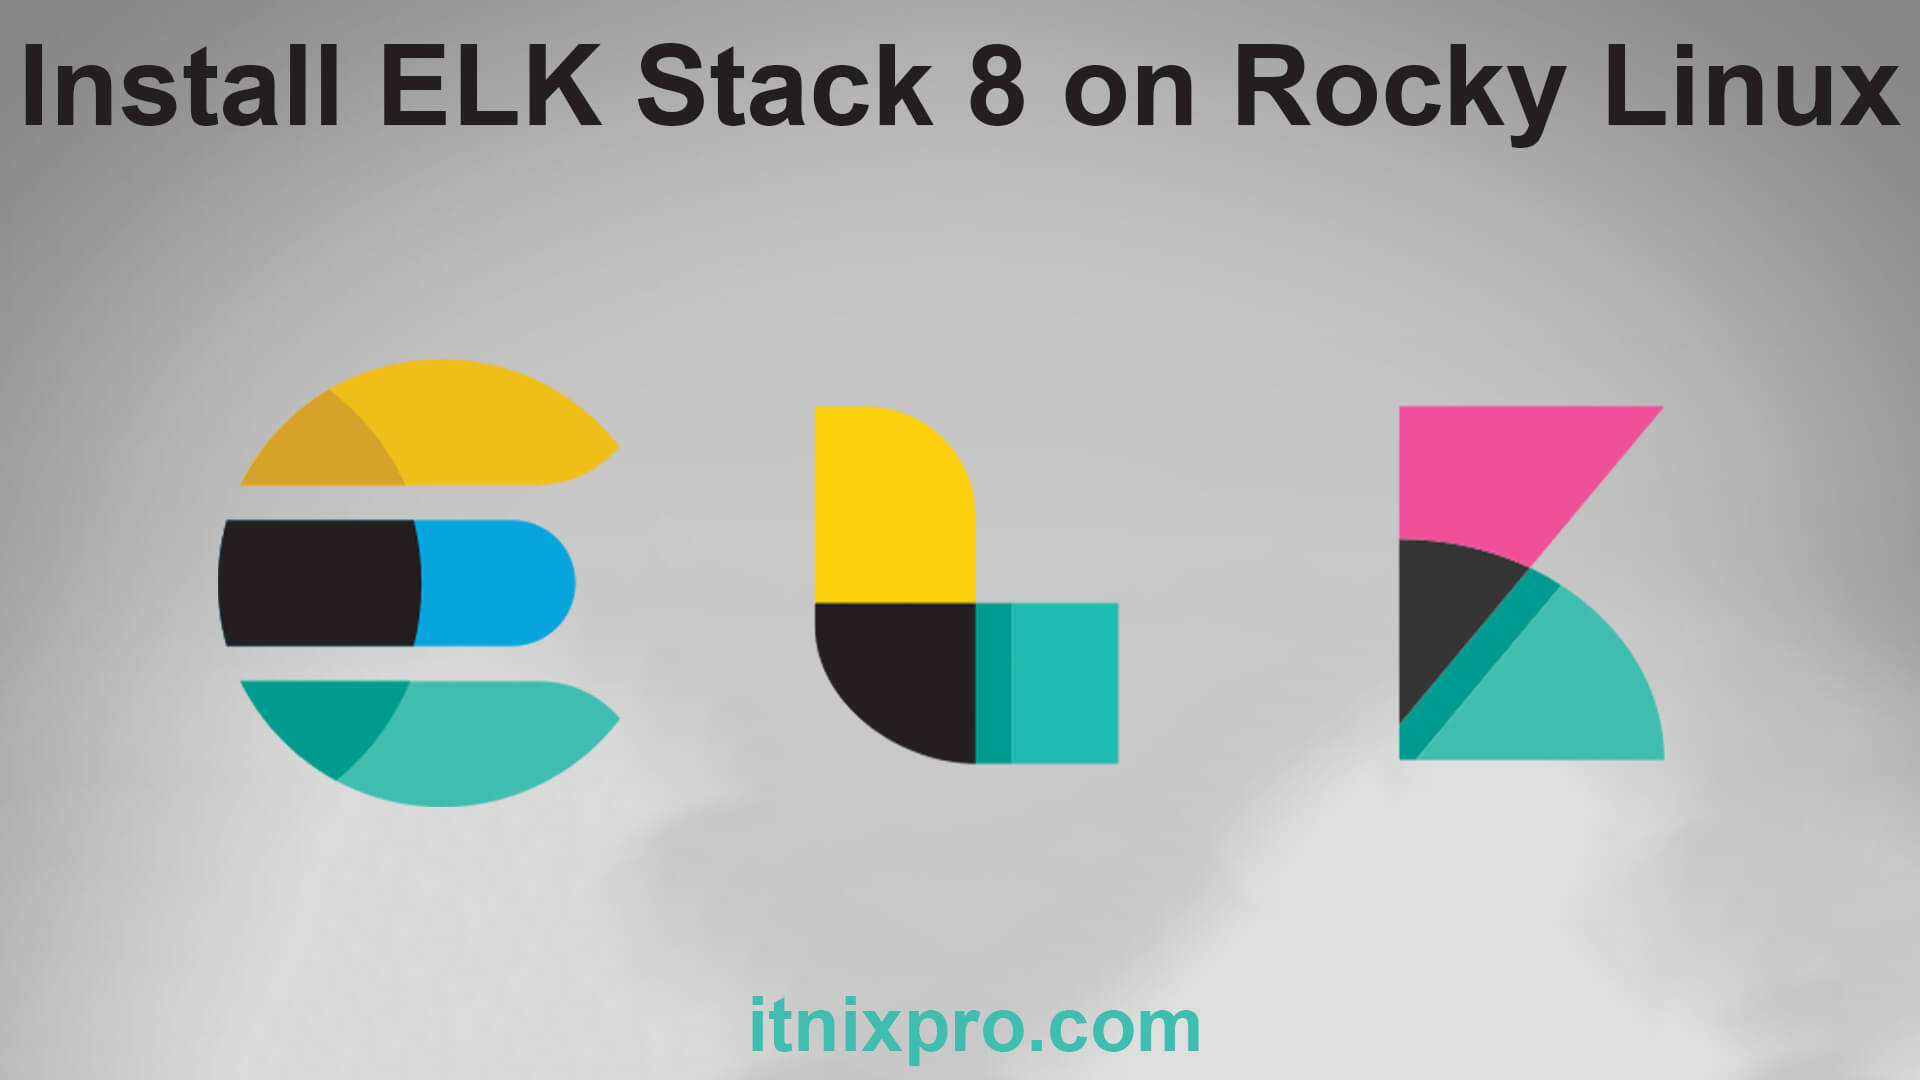 Install ELK Stack 8 on Rocky Linux